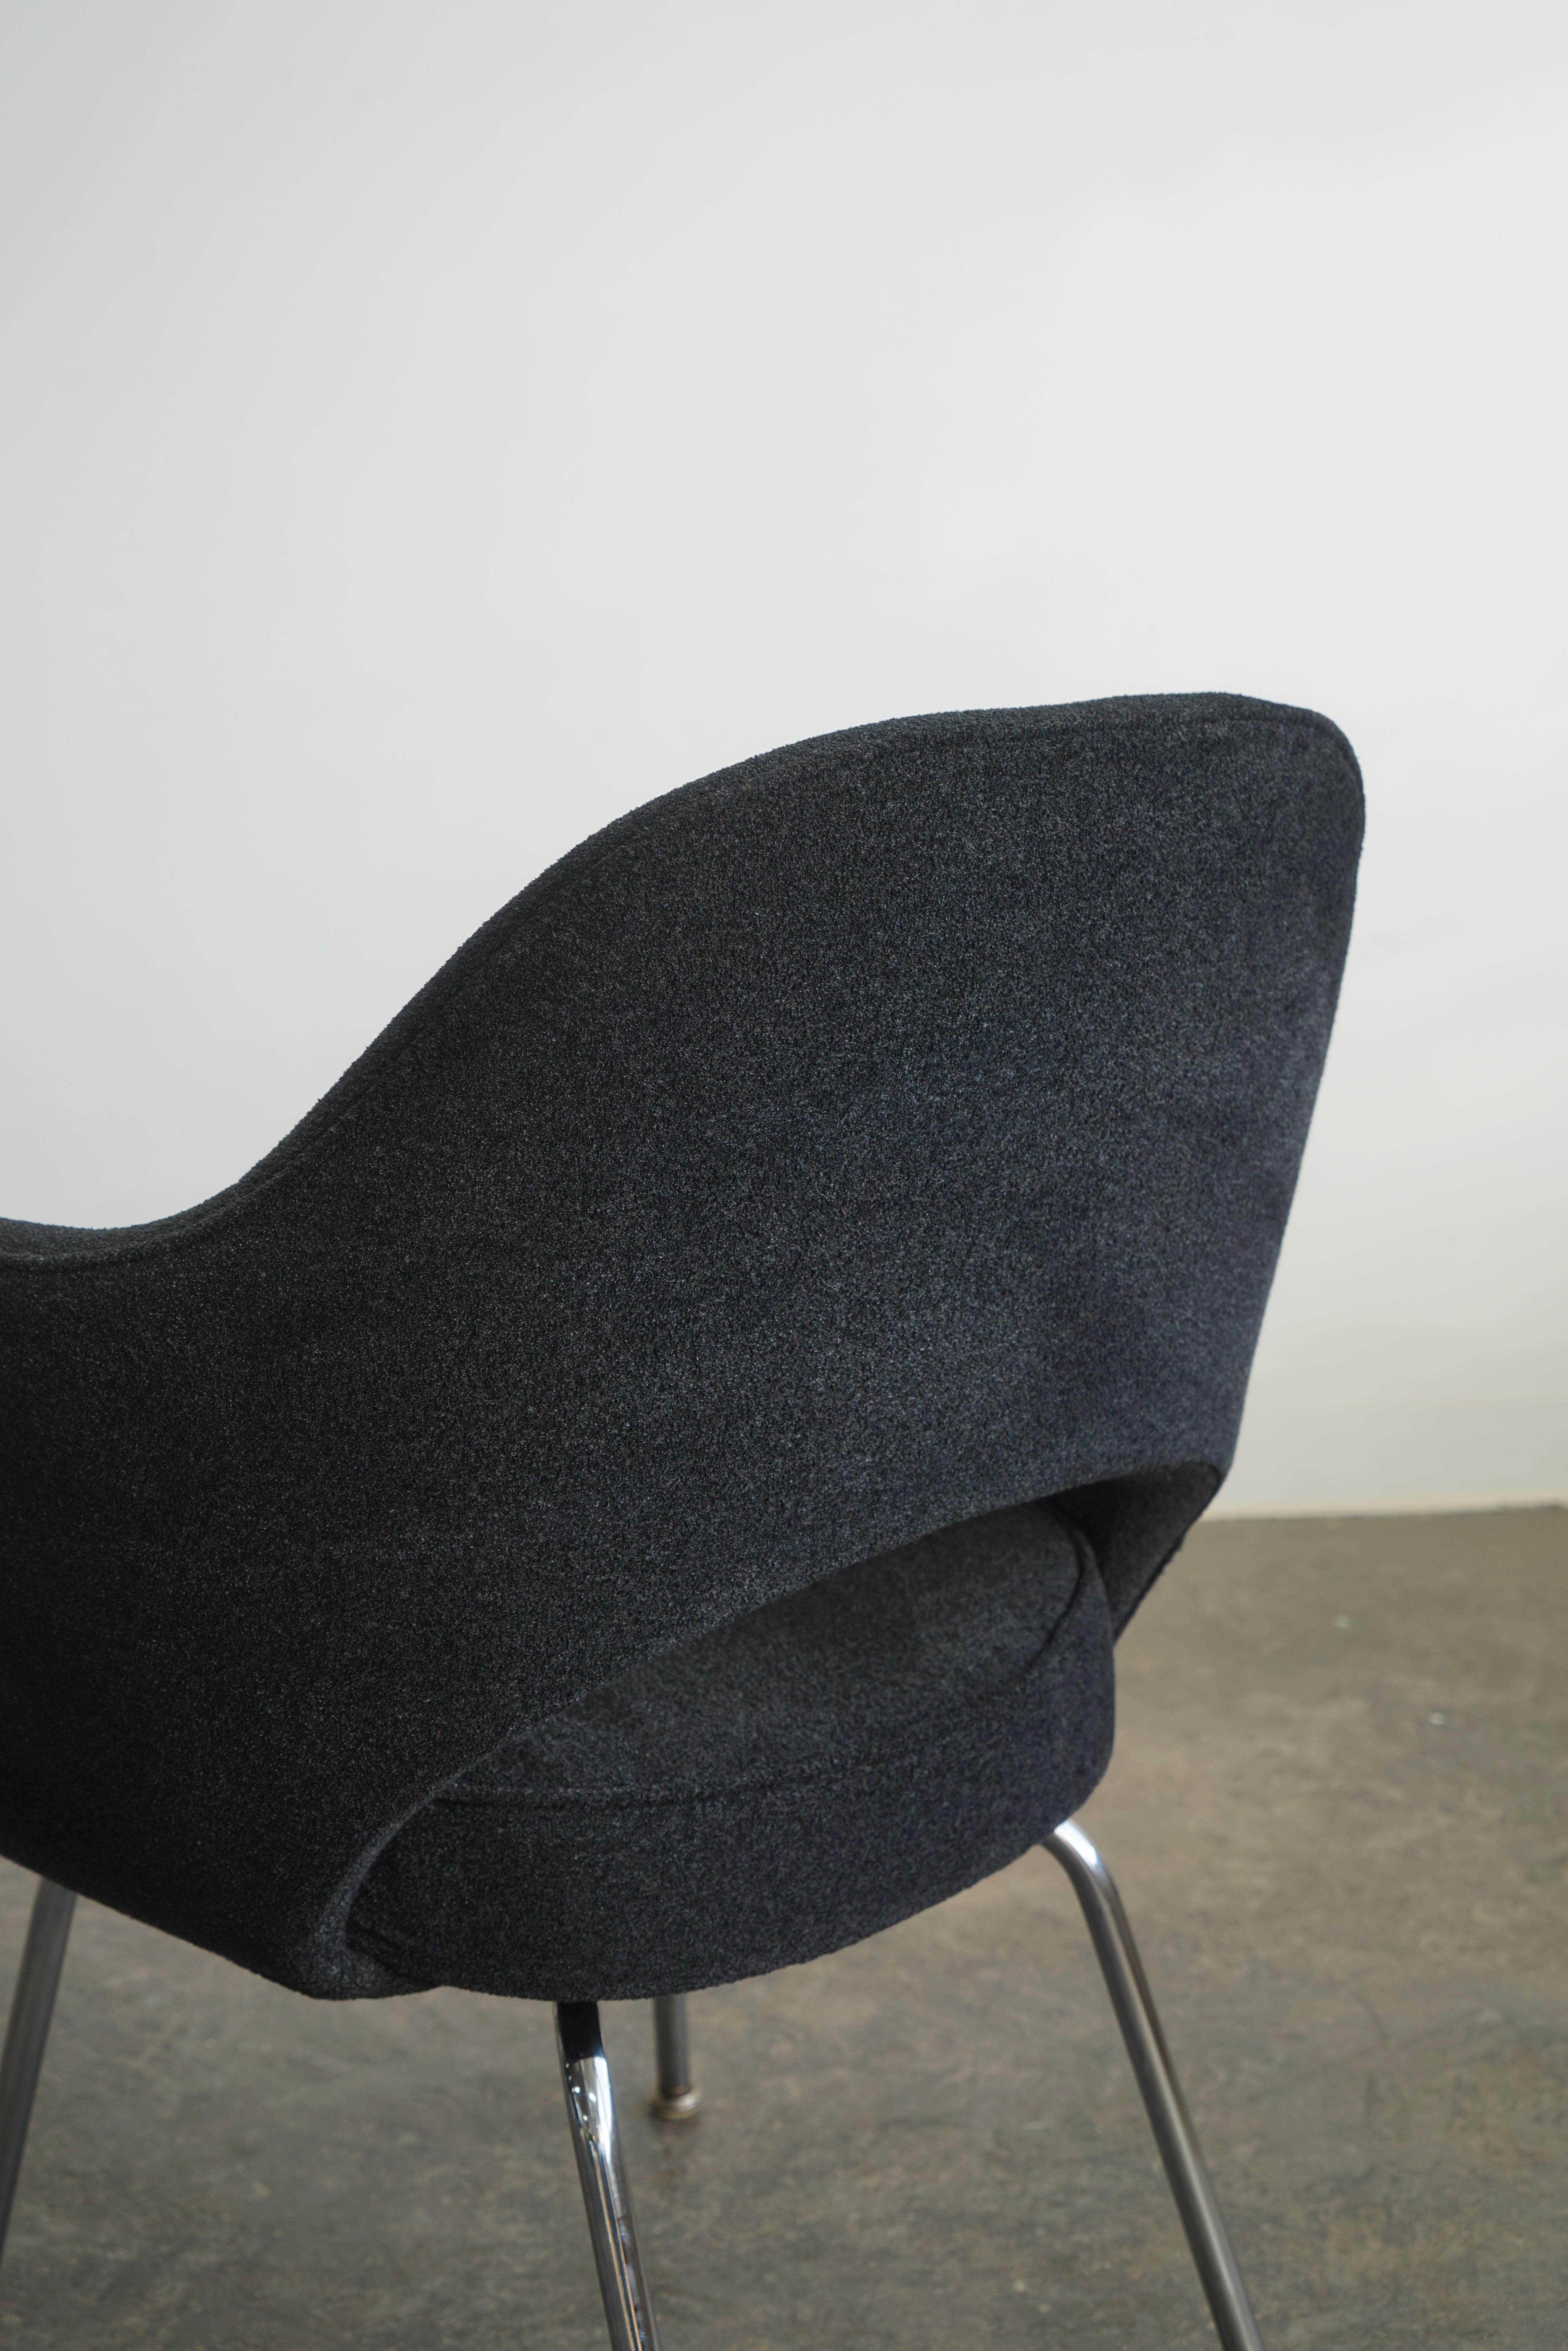 Pair of Knoll Eero Saarinen Executive Chairs, Armchair version black upholstery 5